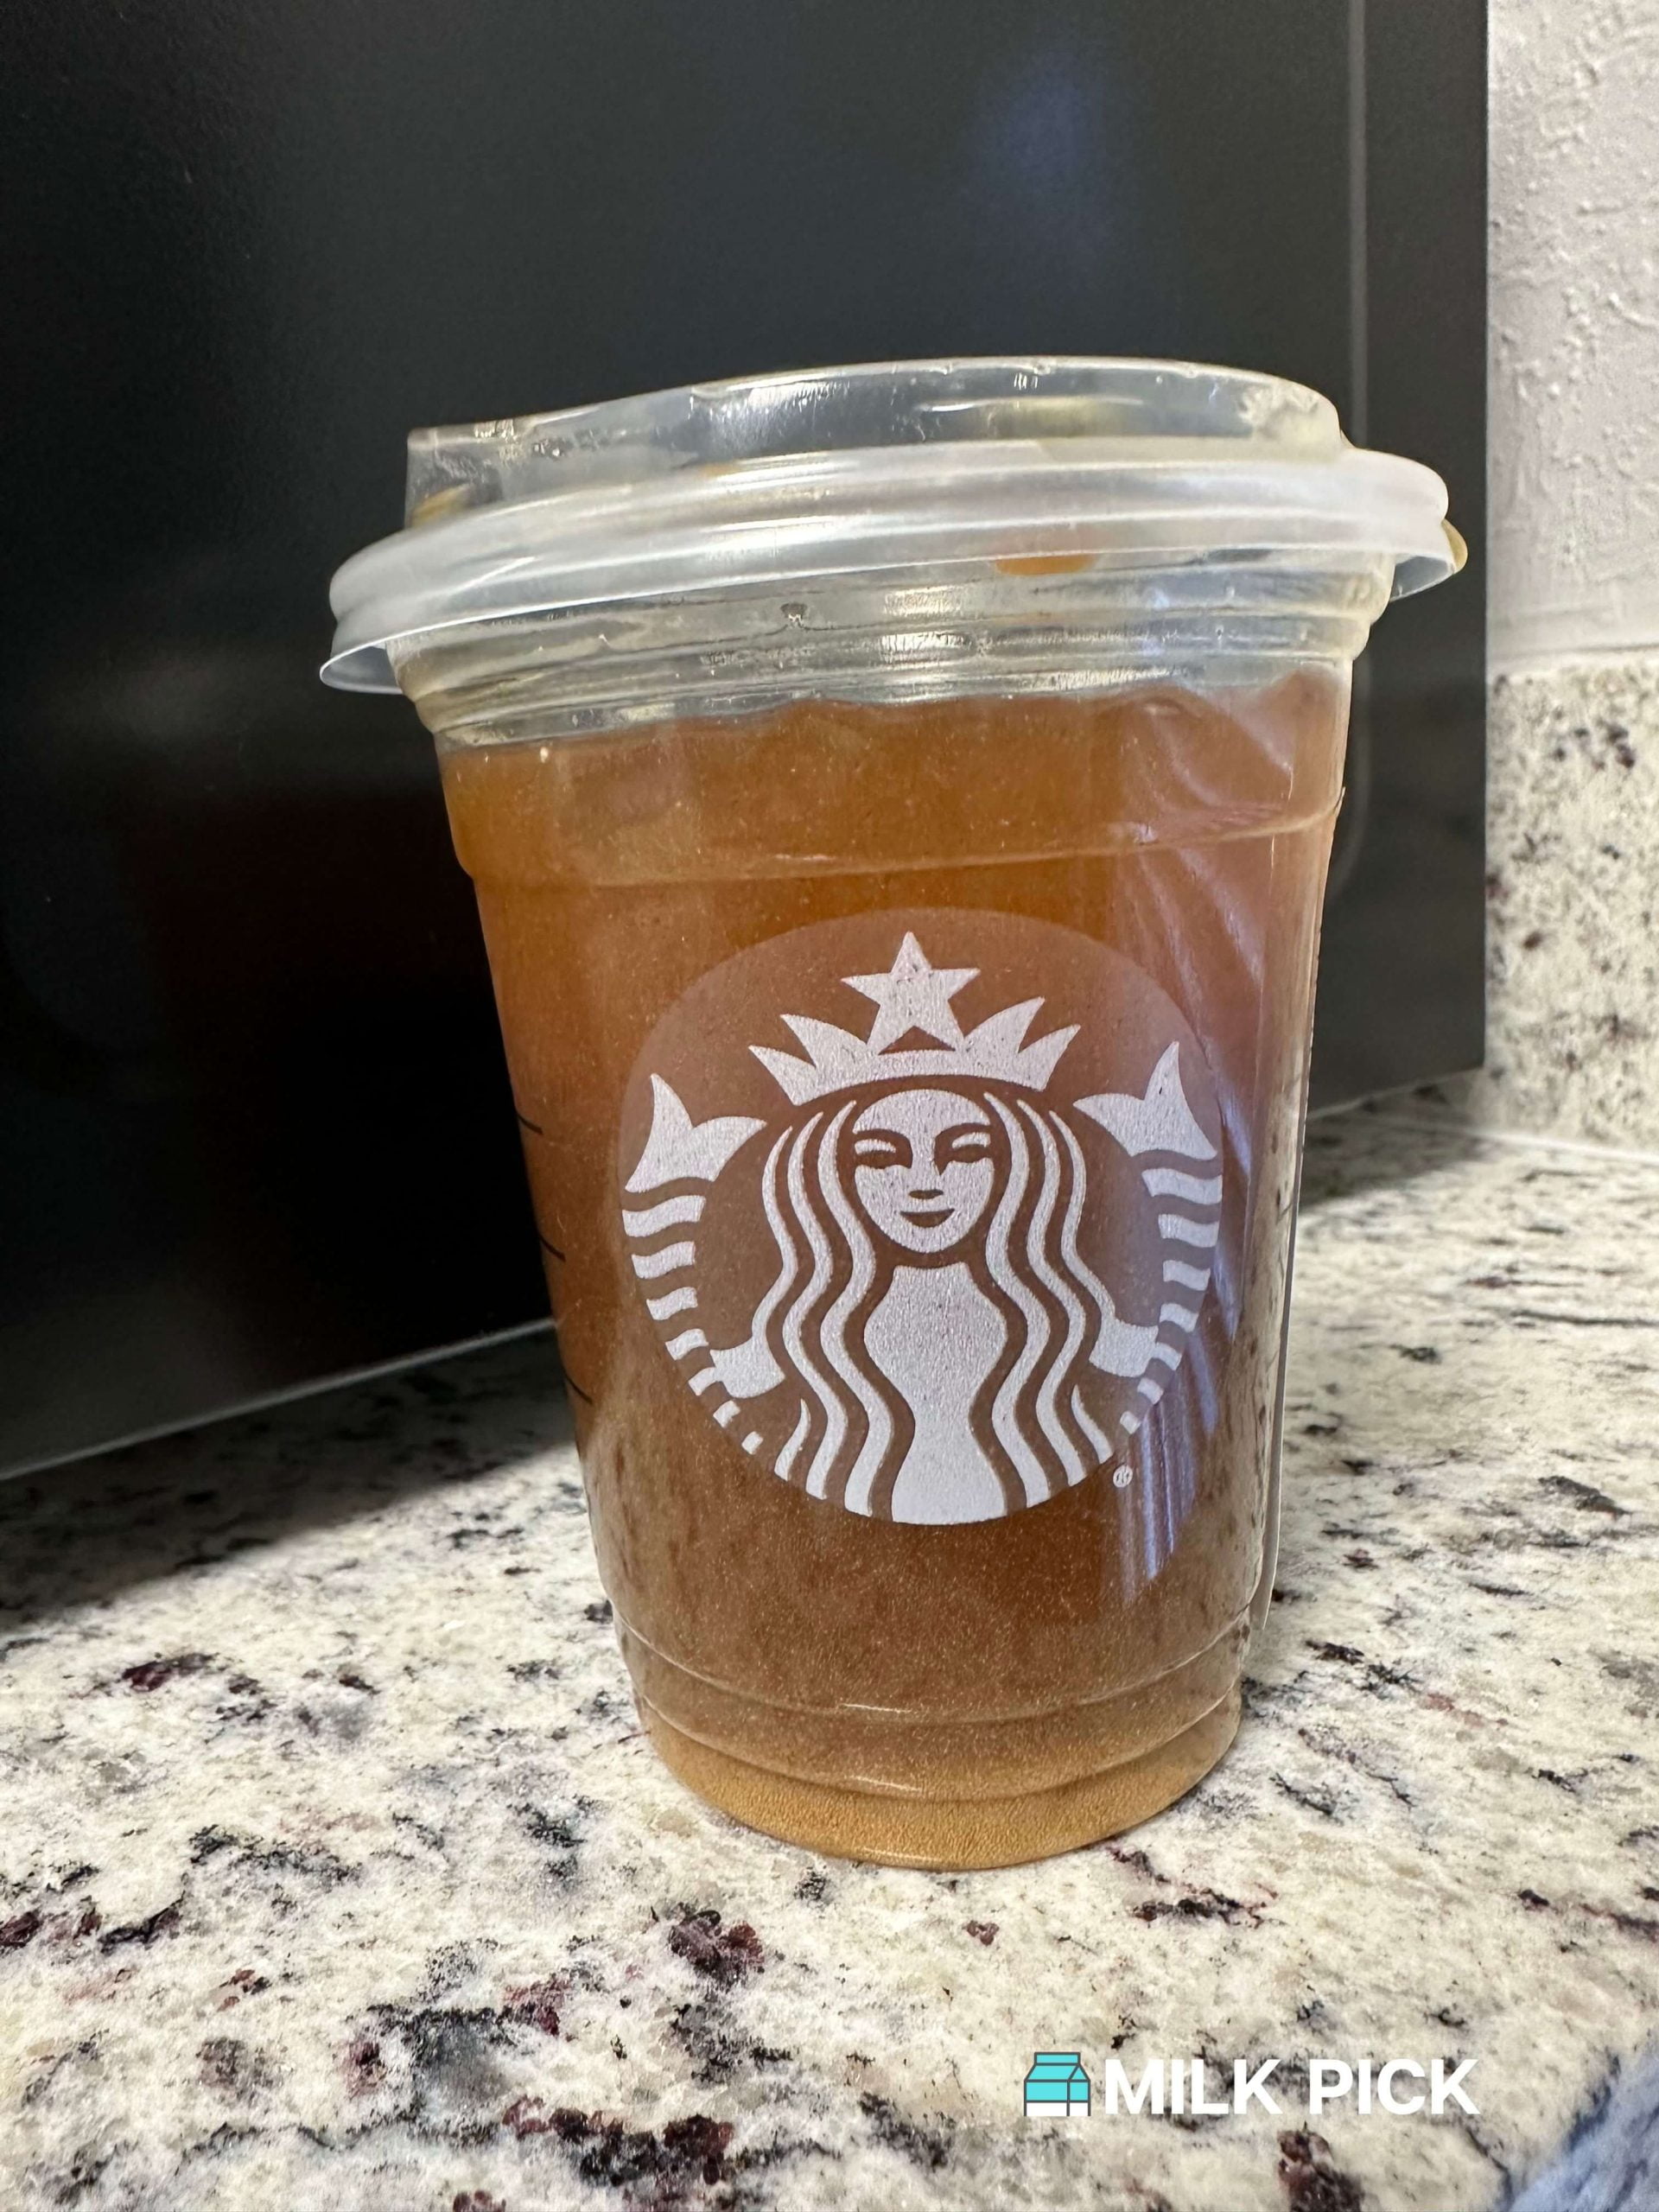 Starbucks Iced Coffee With Almond Milk